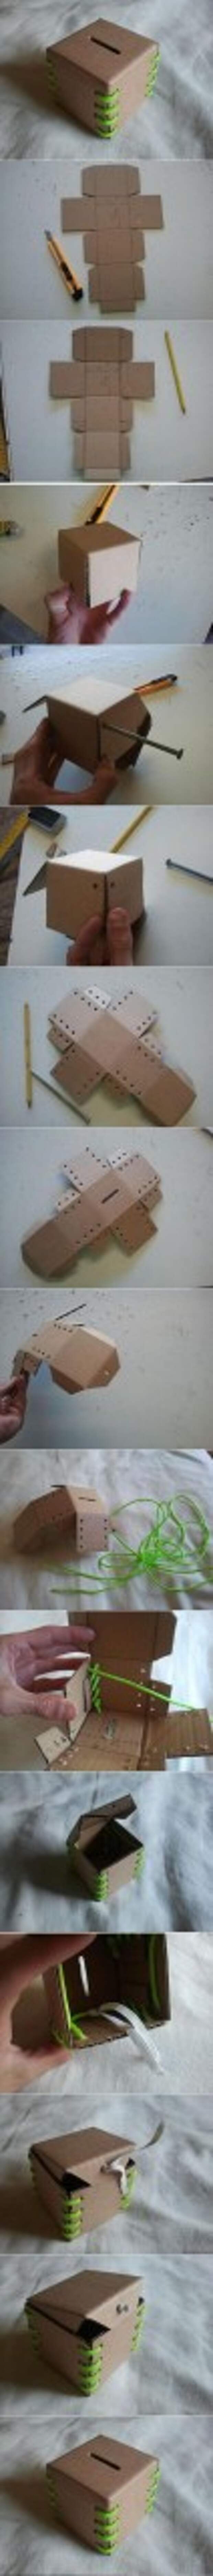 DIY Cardboard Piggy Bank: 